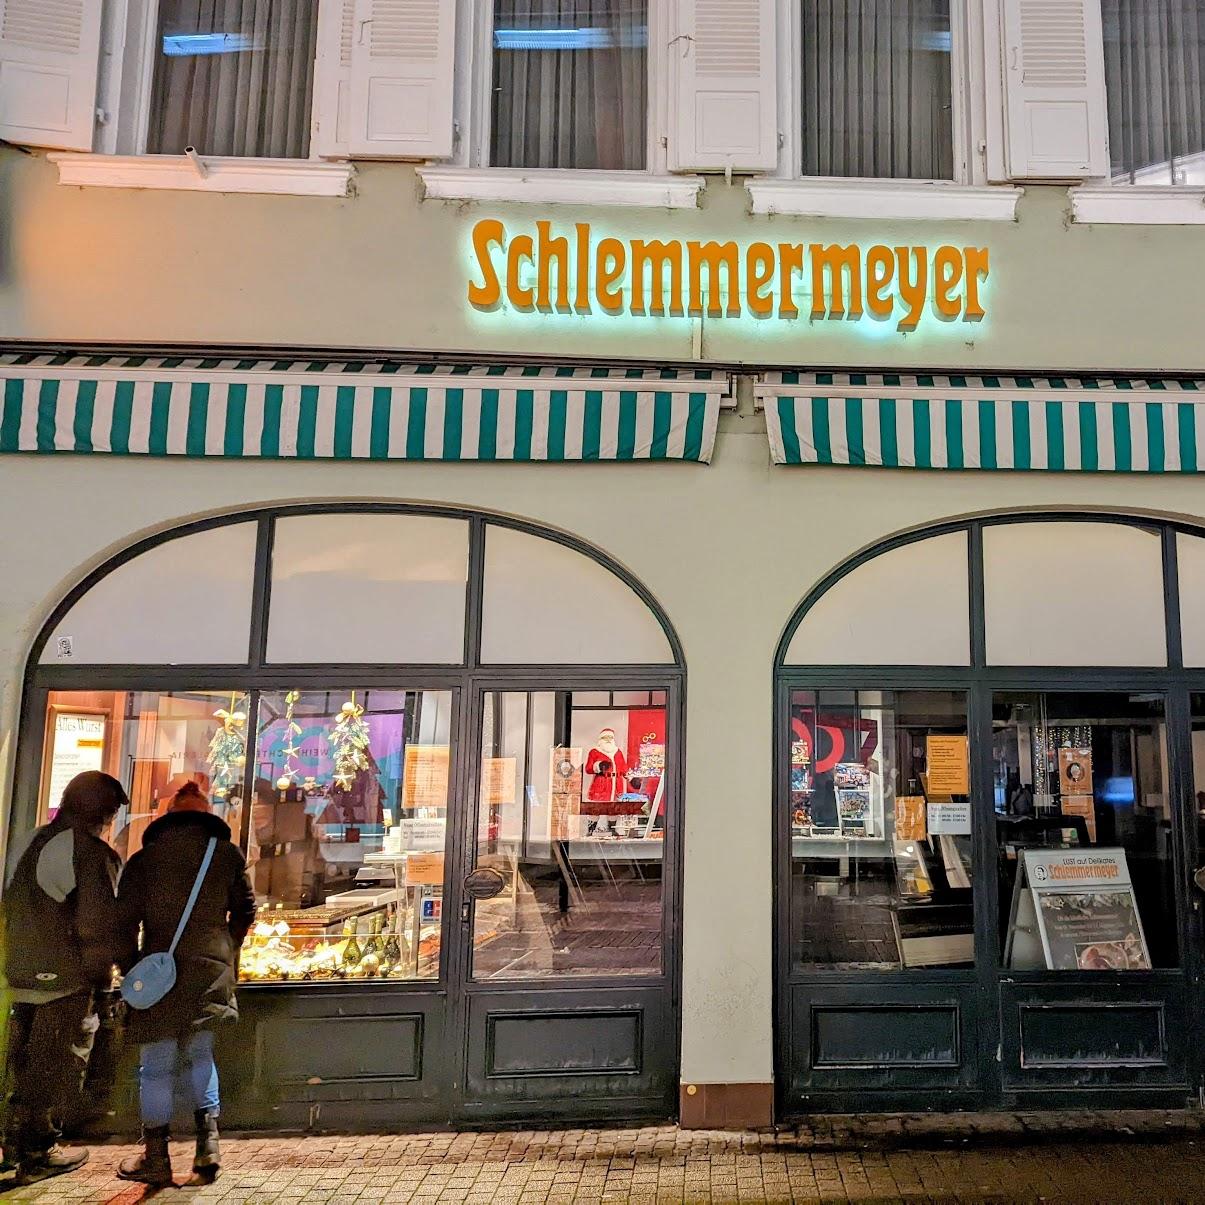 Restaurant "Schlemmermeyer" in Heidelberg